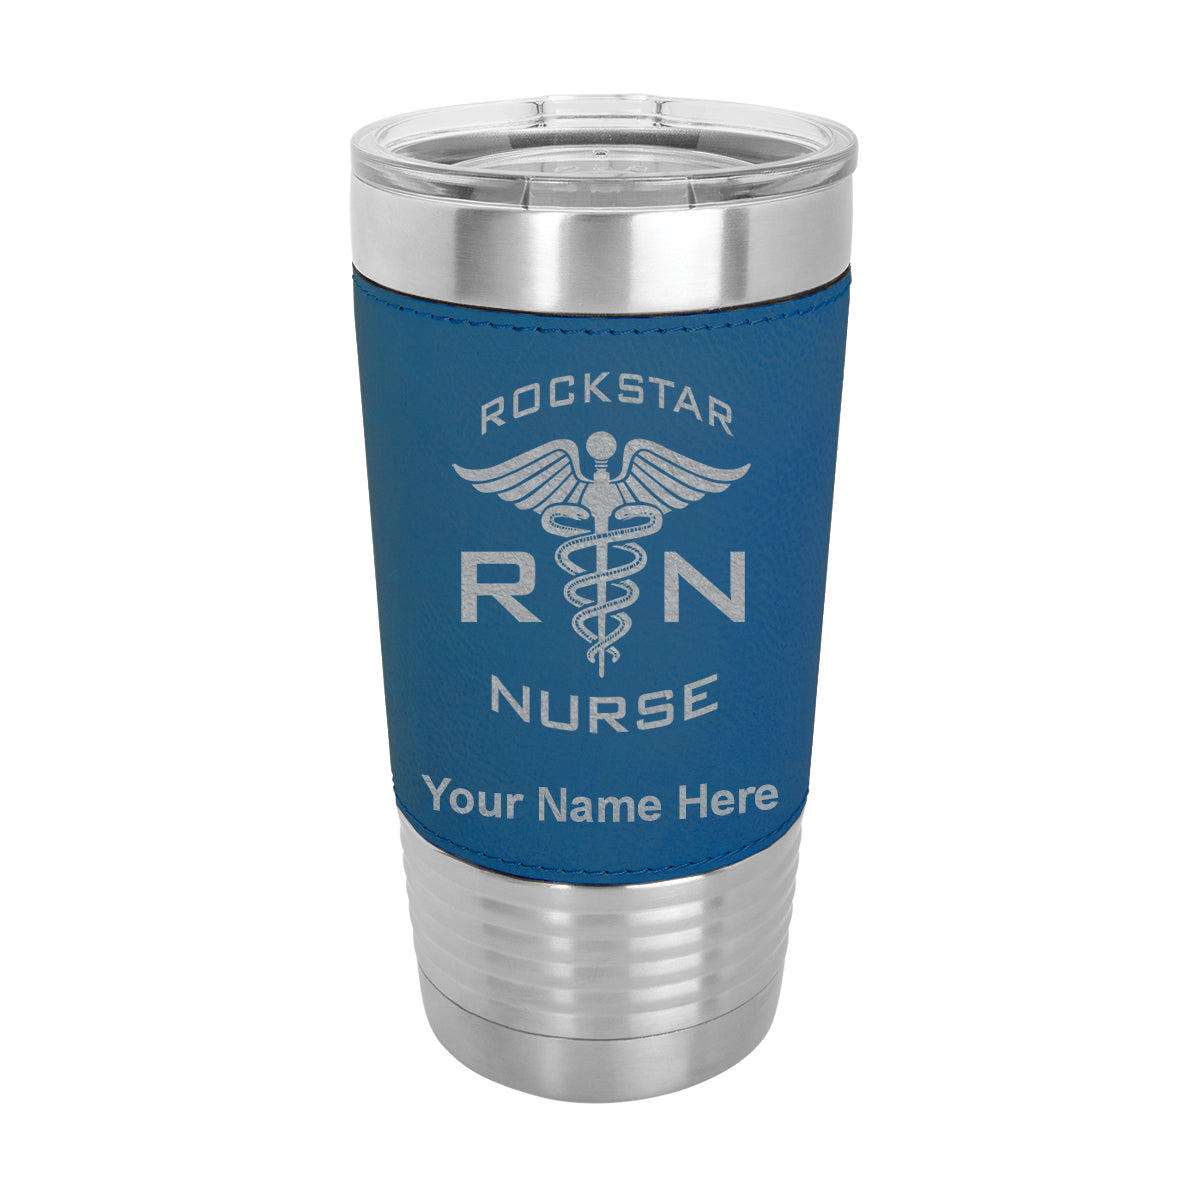 20oz Faux Leather Tumbler Mug, RN Rockstar Nurse, Personalized Engraving Included - LaserGram Custom Engraved Gifts